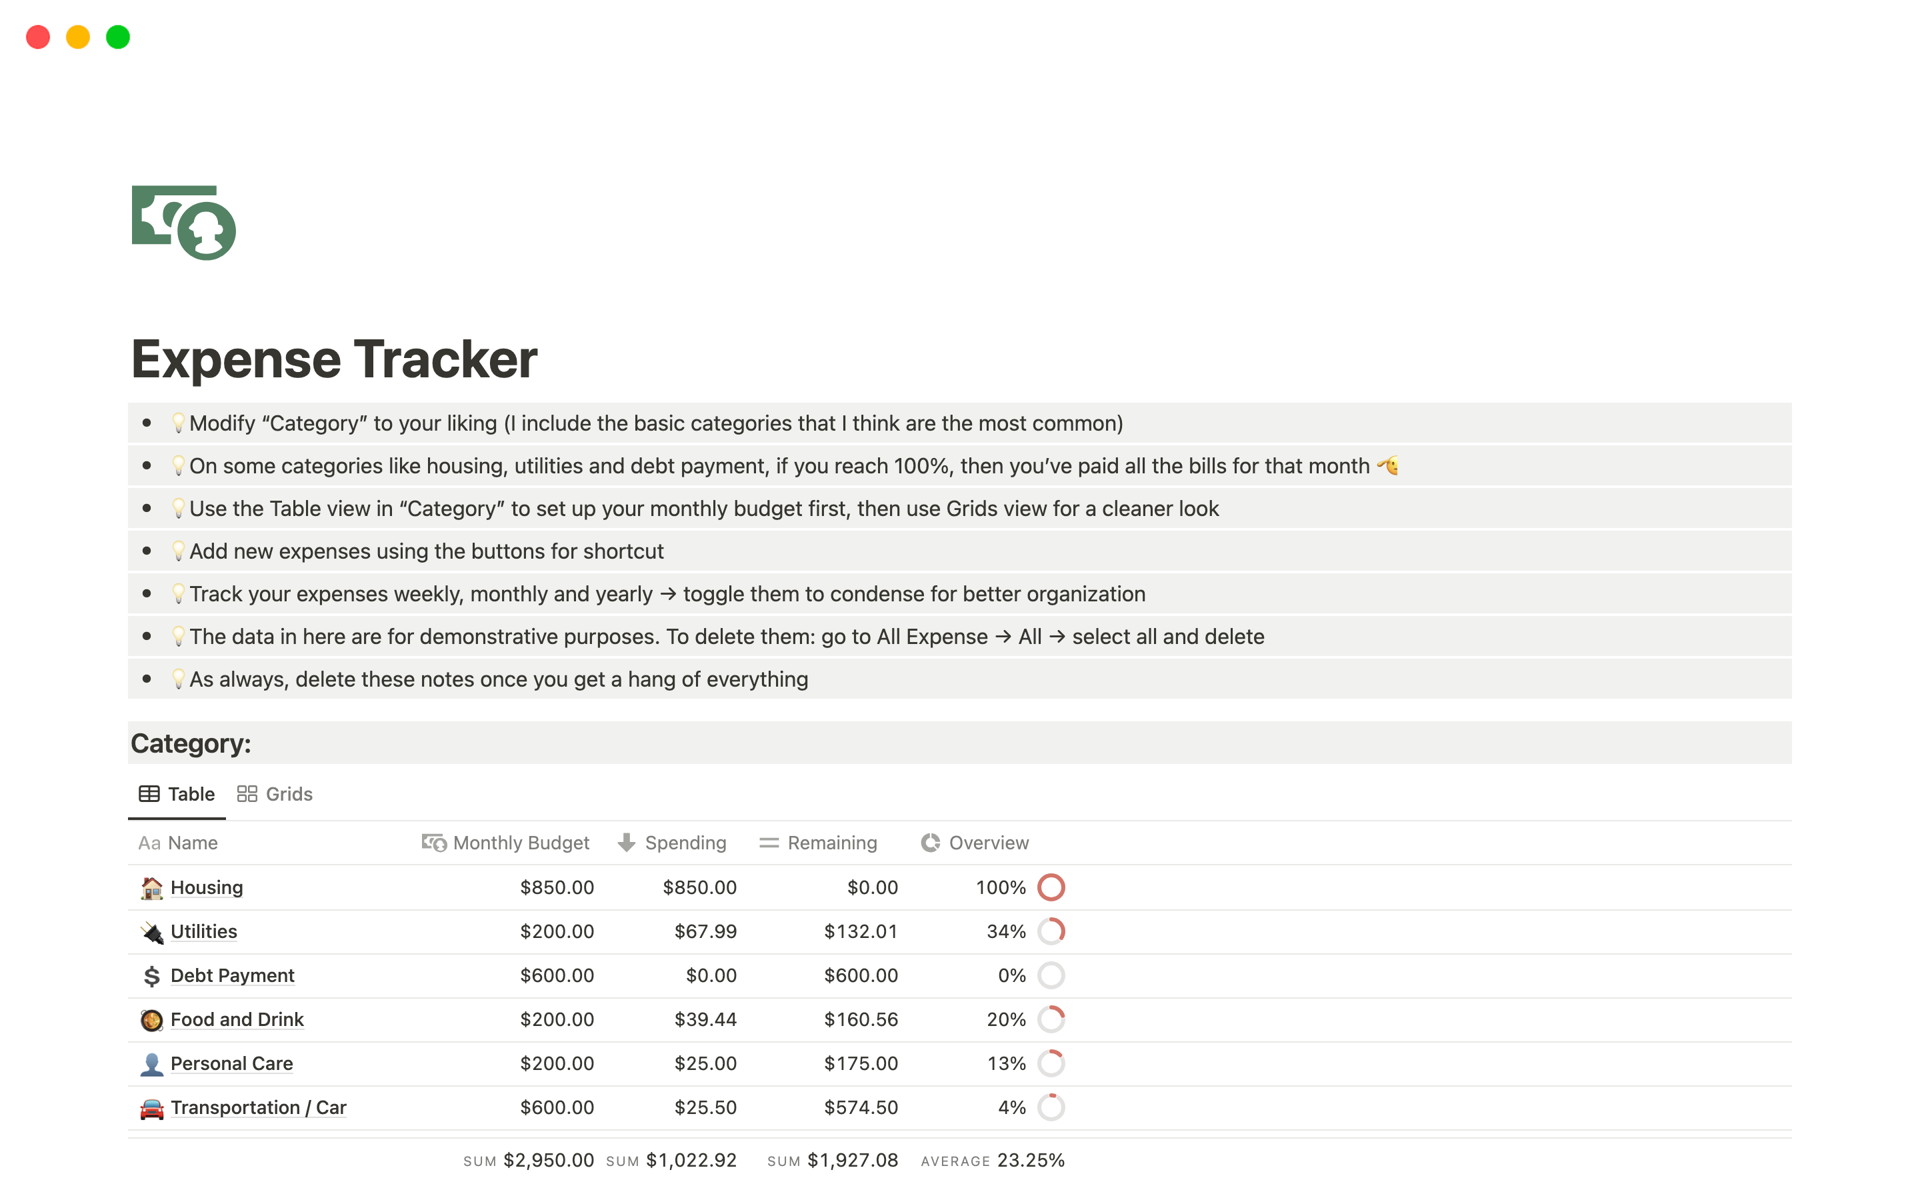 Vista previa de una plantilla para Expense Tracker